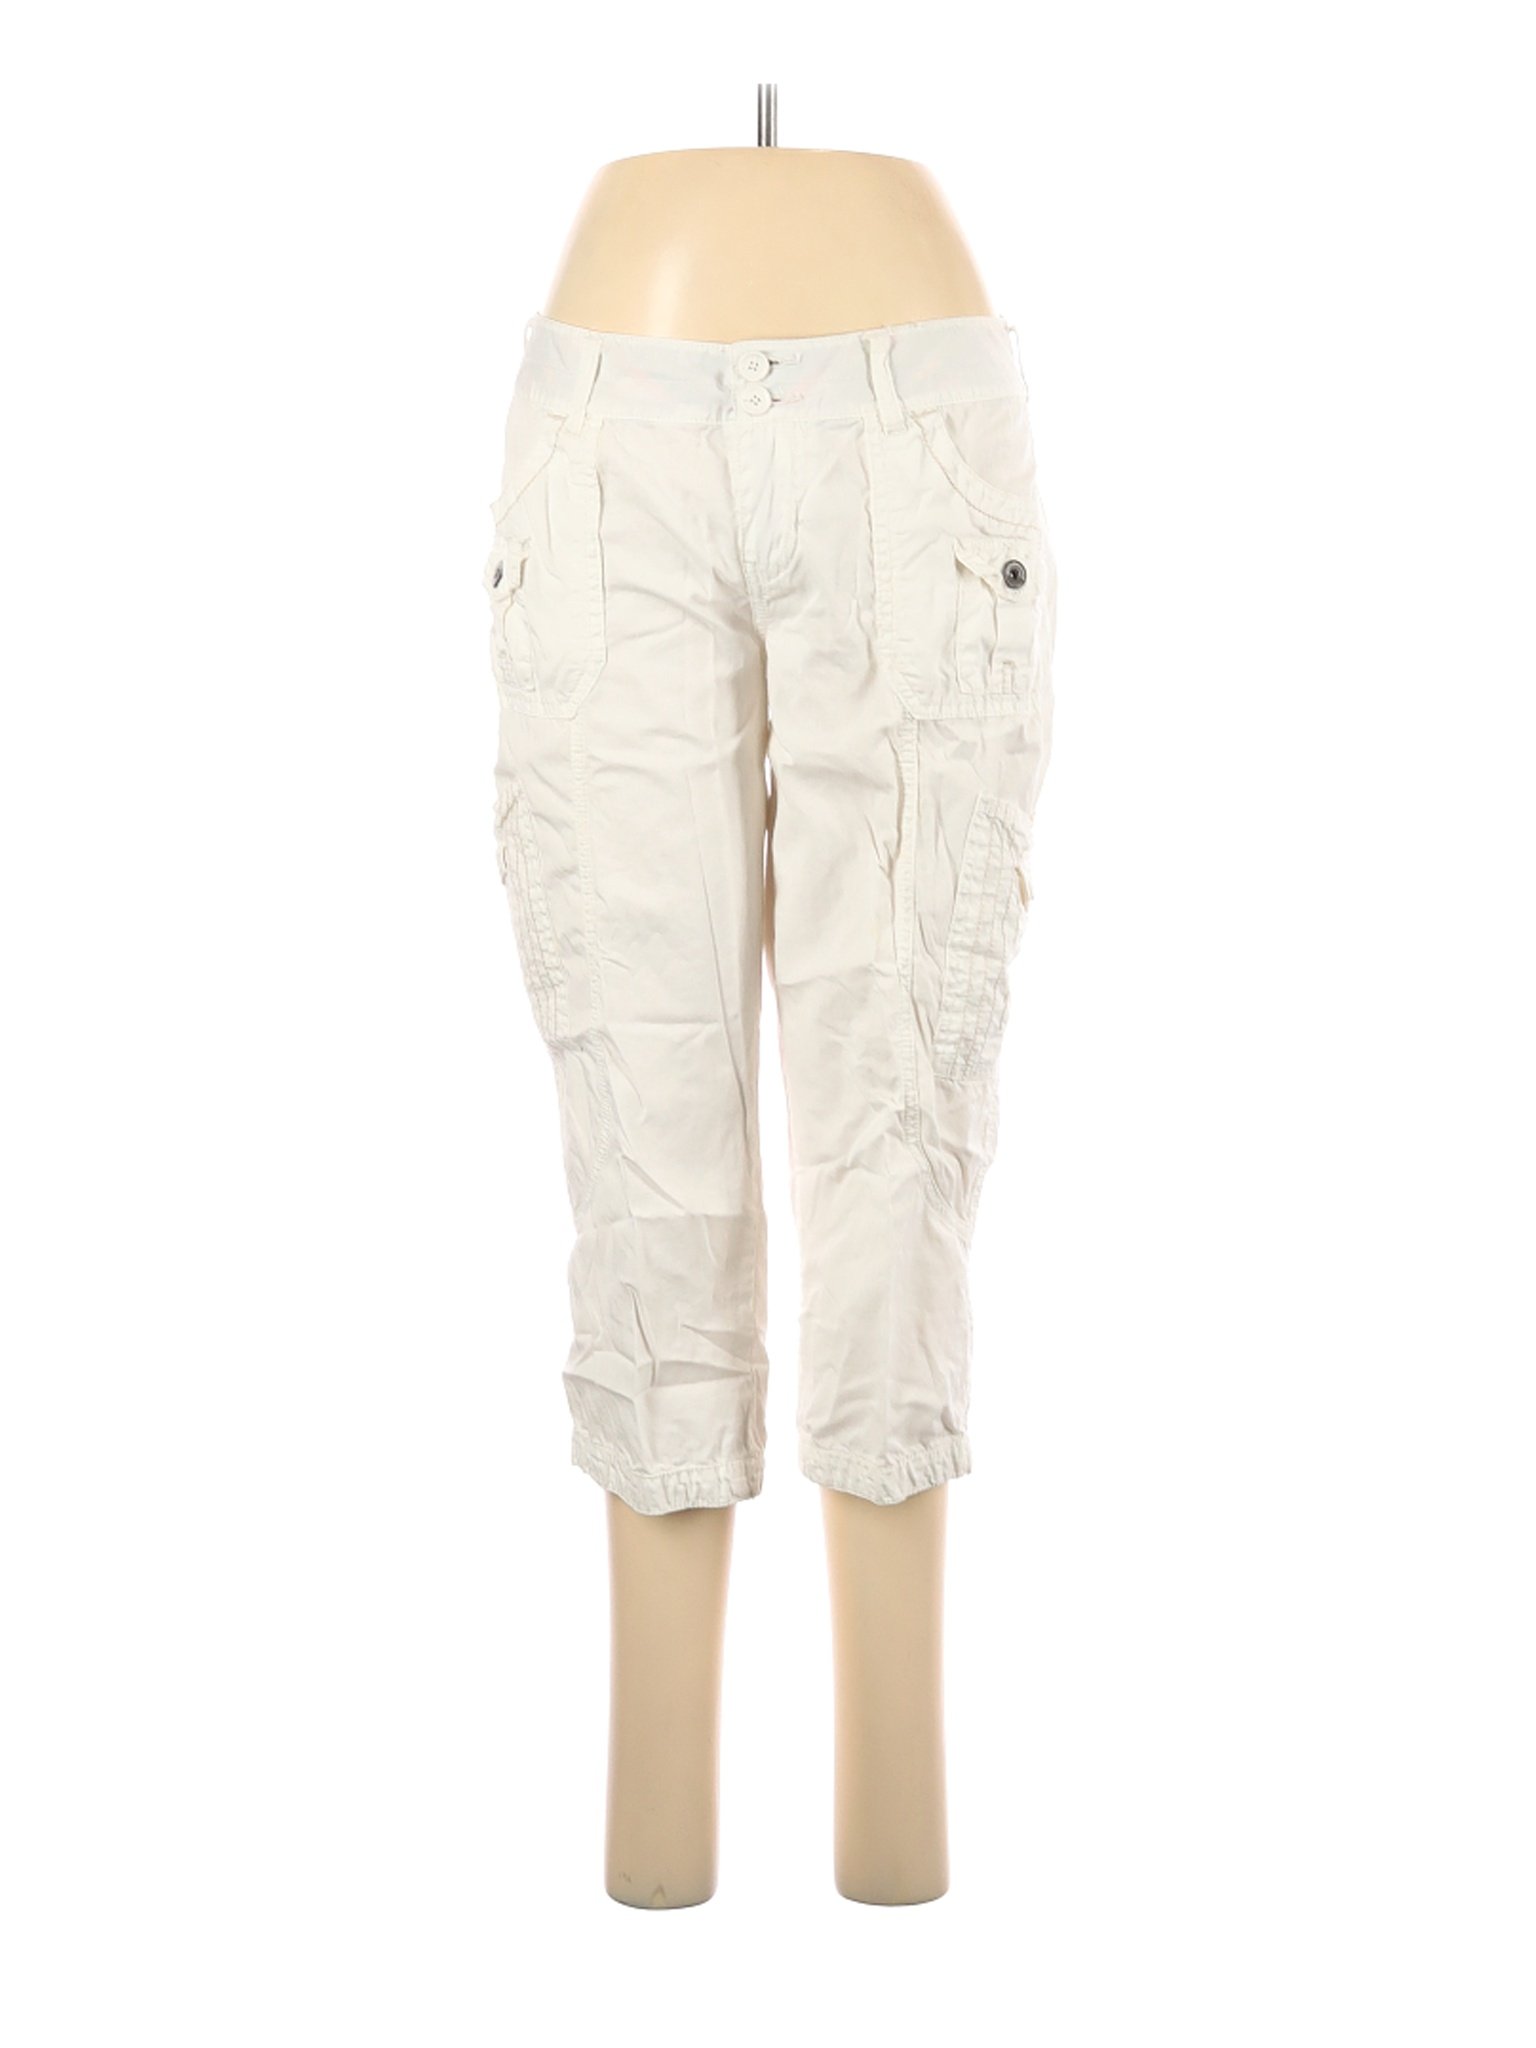 Unionbay Women Ivory Cargo Pants 9 | eBay